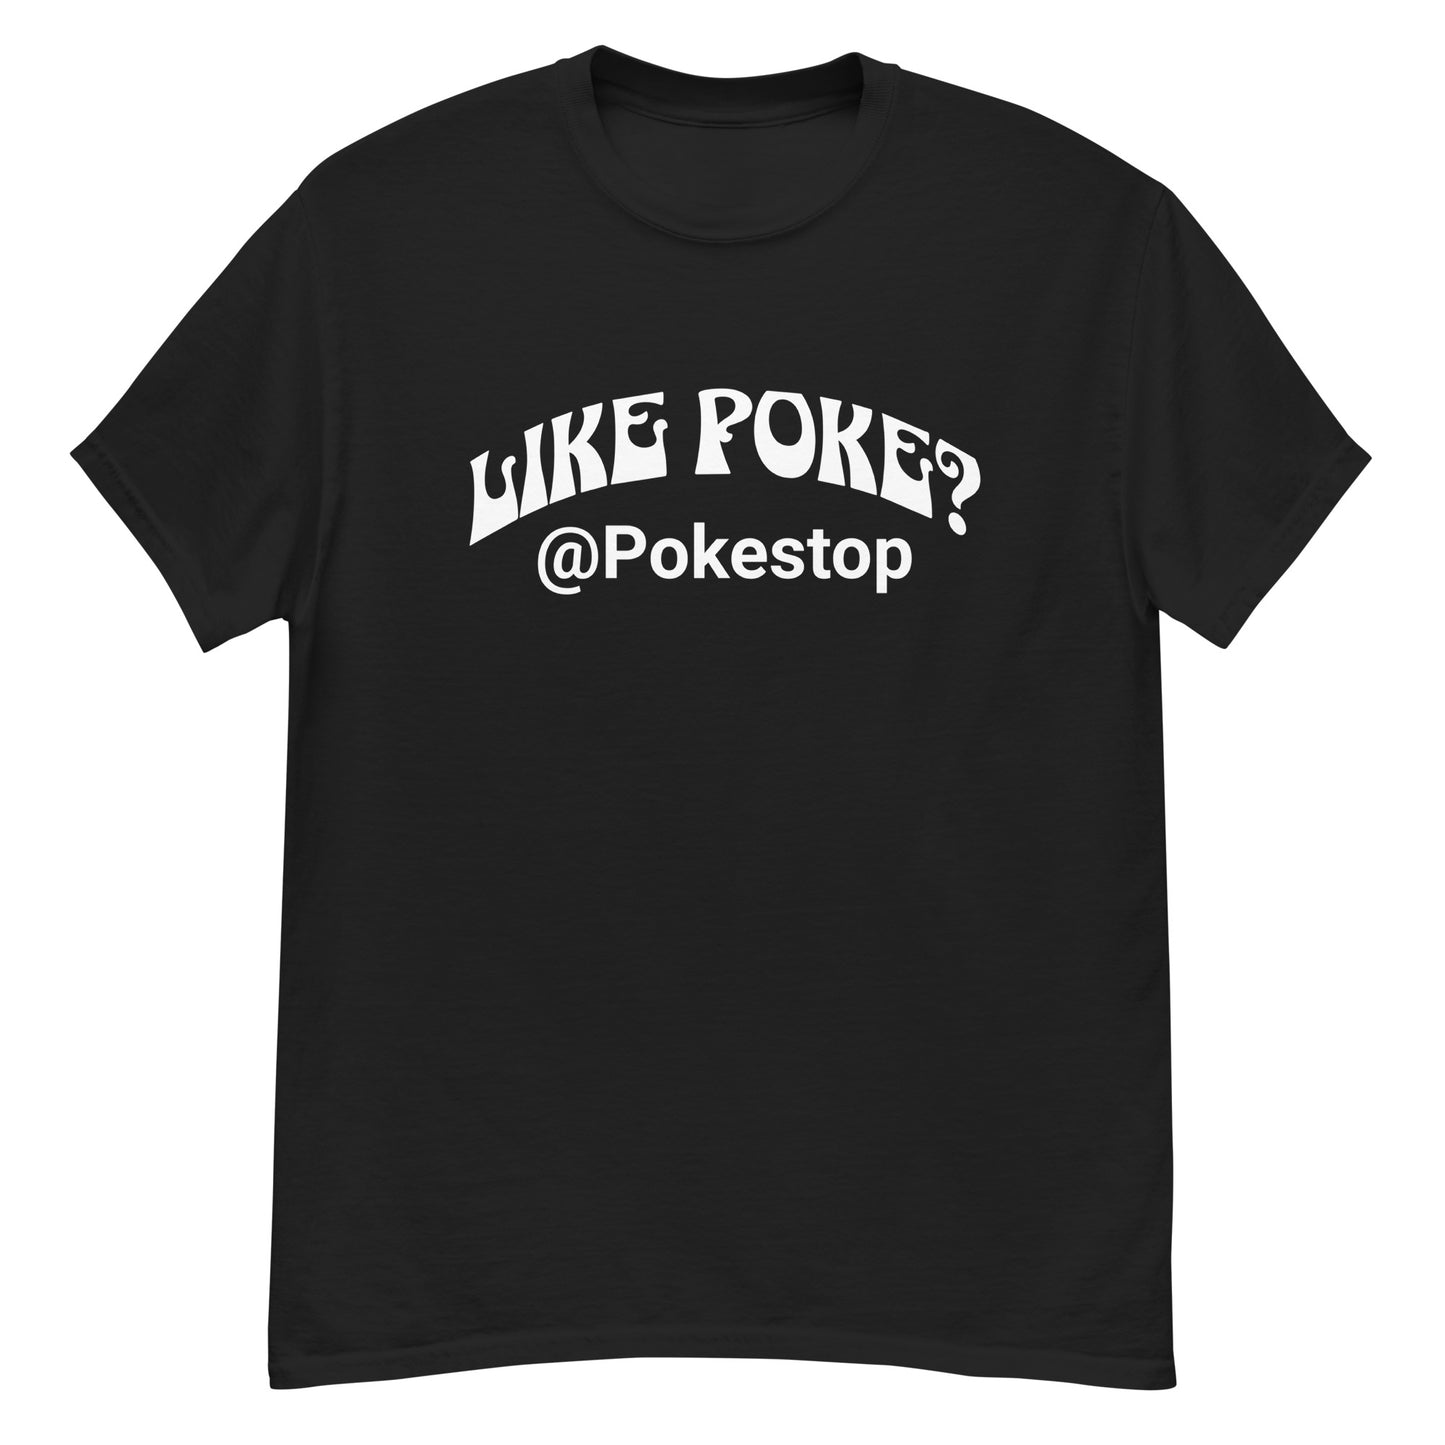 Like Poke?